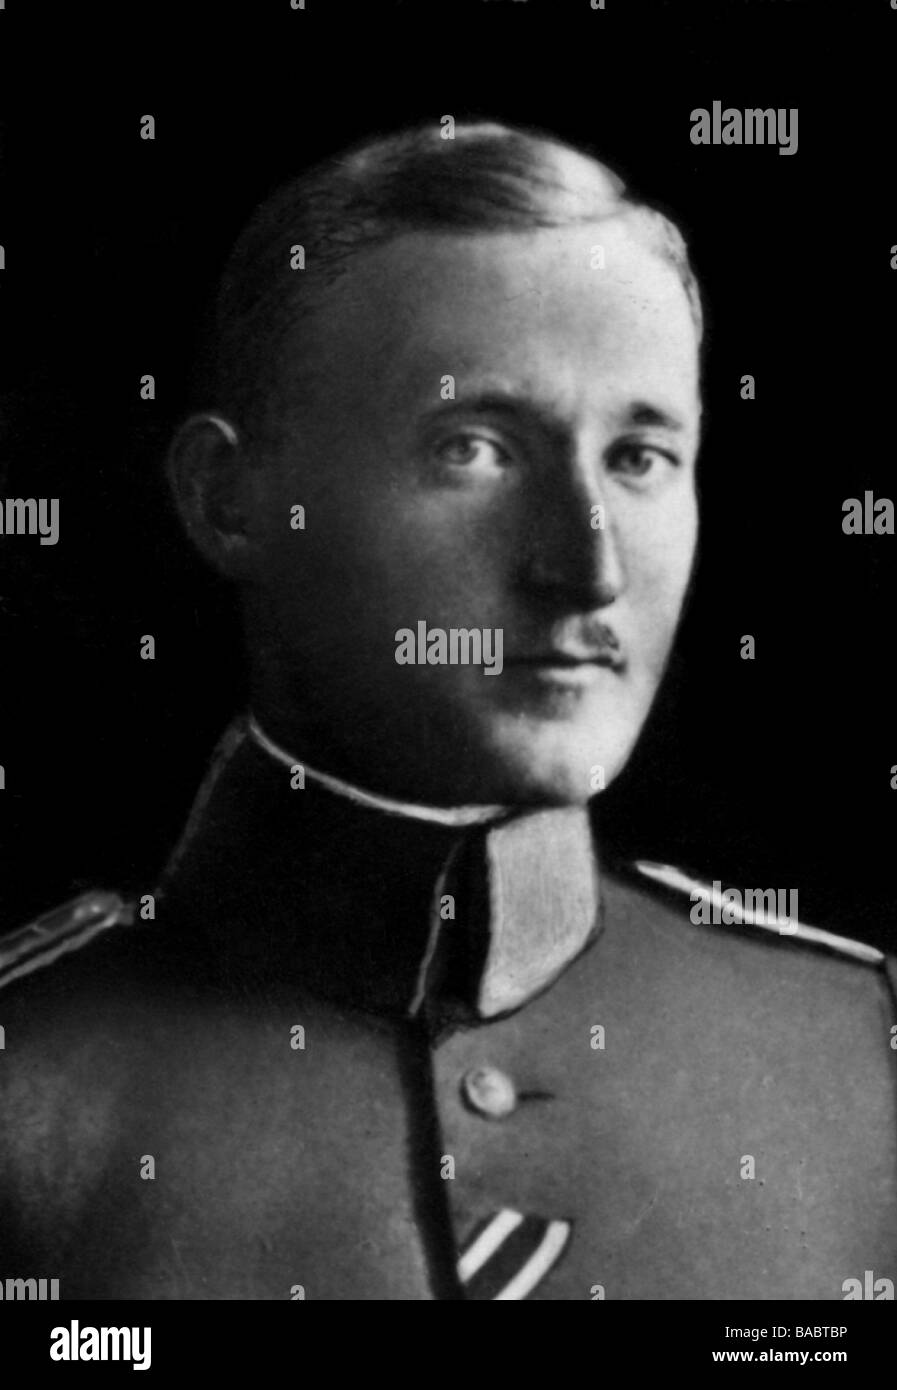 Schlageter, Albert Leo, 12.8.1894 - 26.5.1923, German officer, portrait in uniform, photo, 1918, cigarette card, Stock Photo